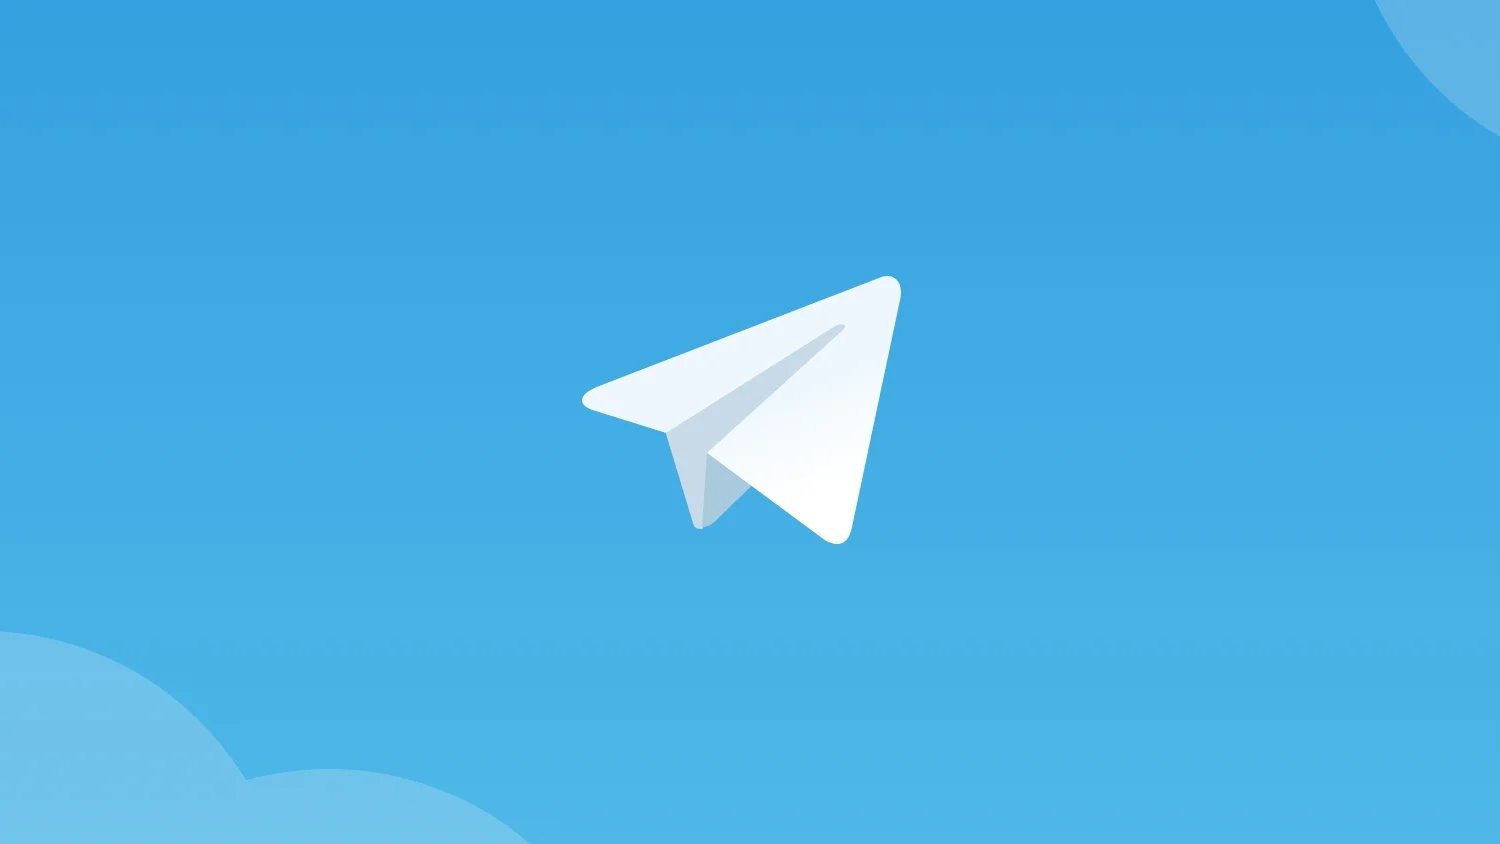 Telegram app